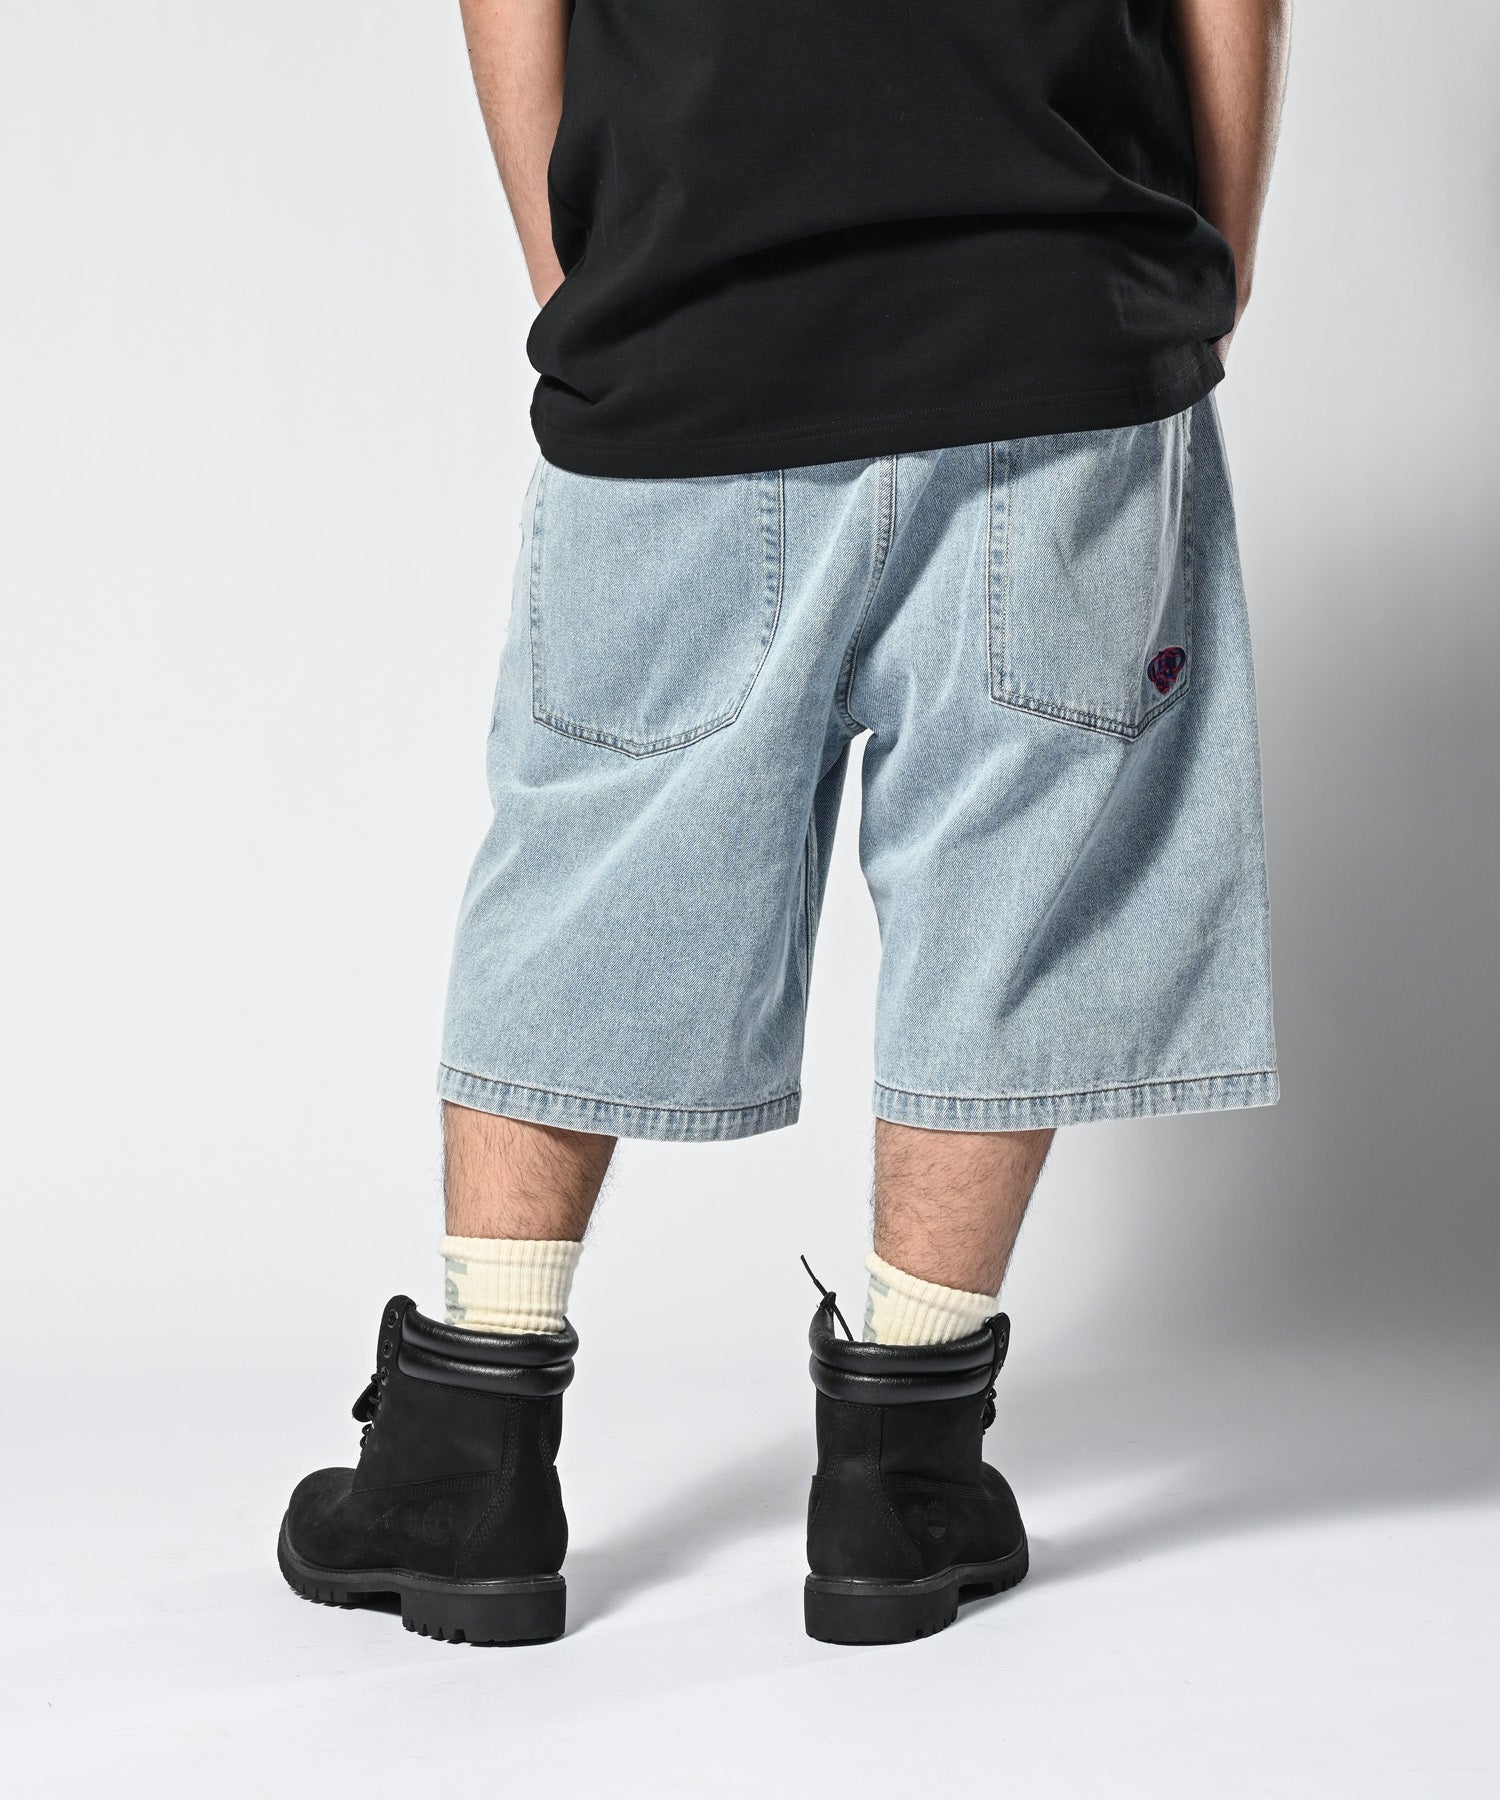 LFYT 5 口袋牛仔短褲 寬鬆版型 LS231302